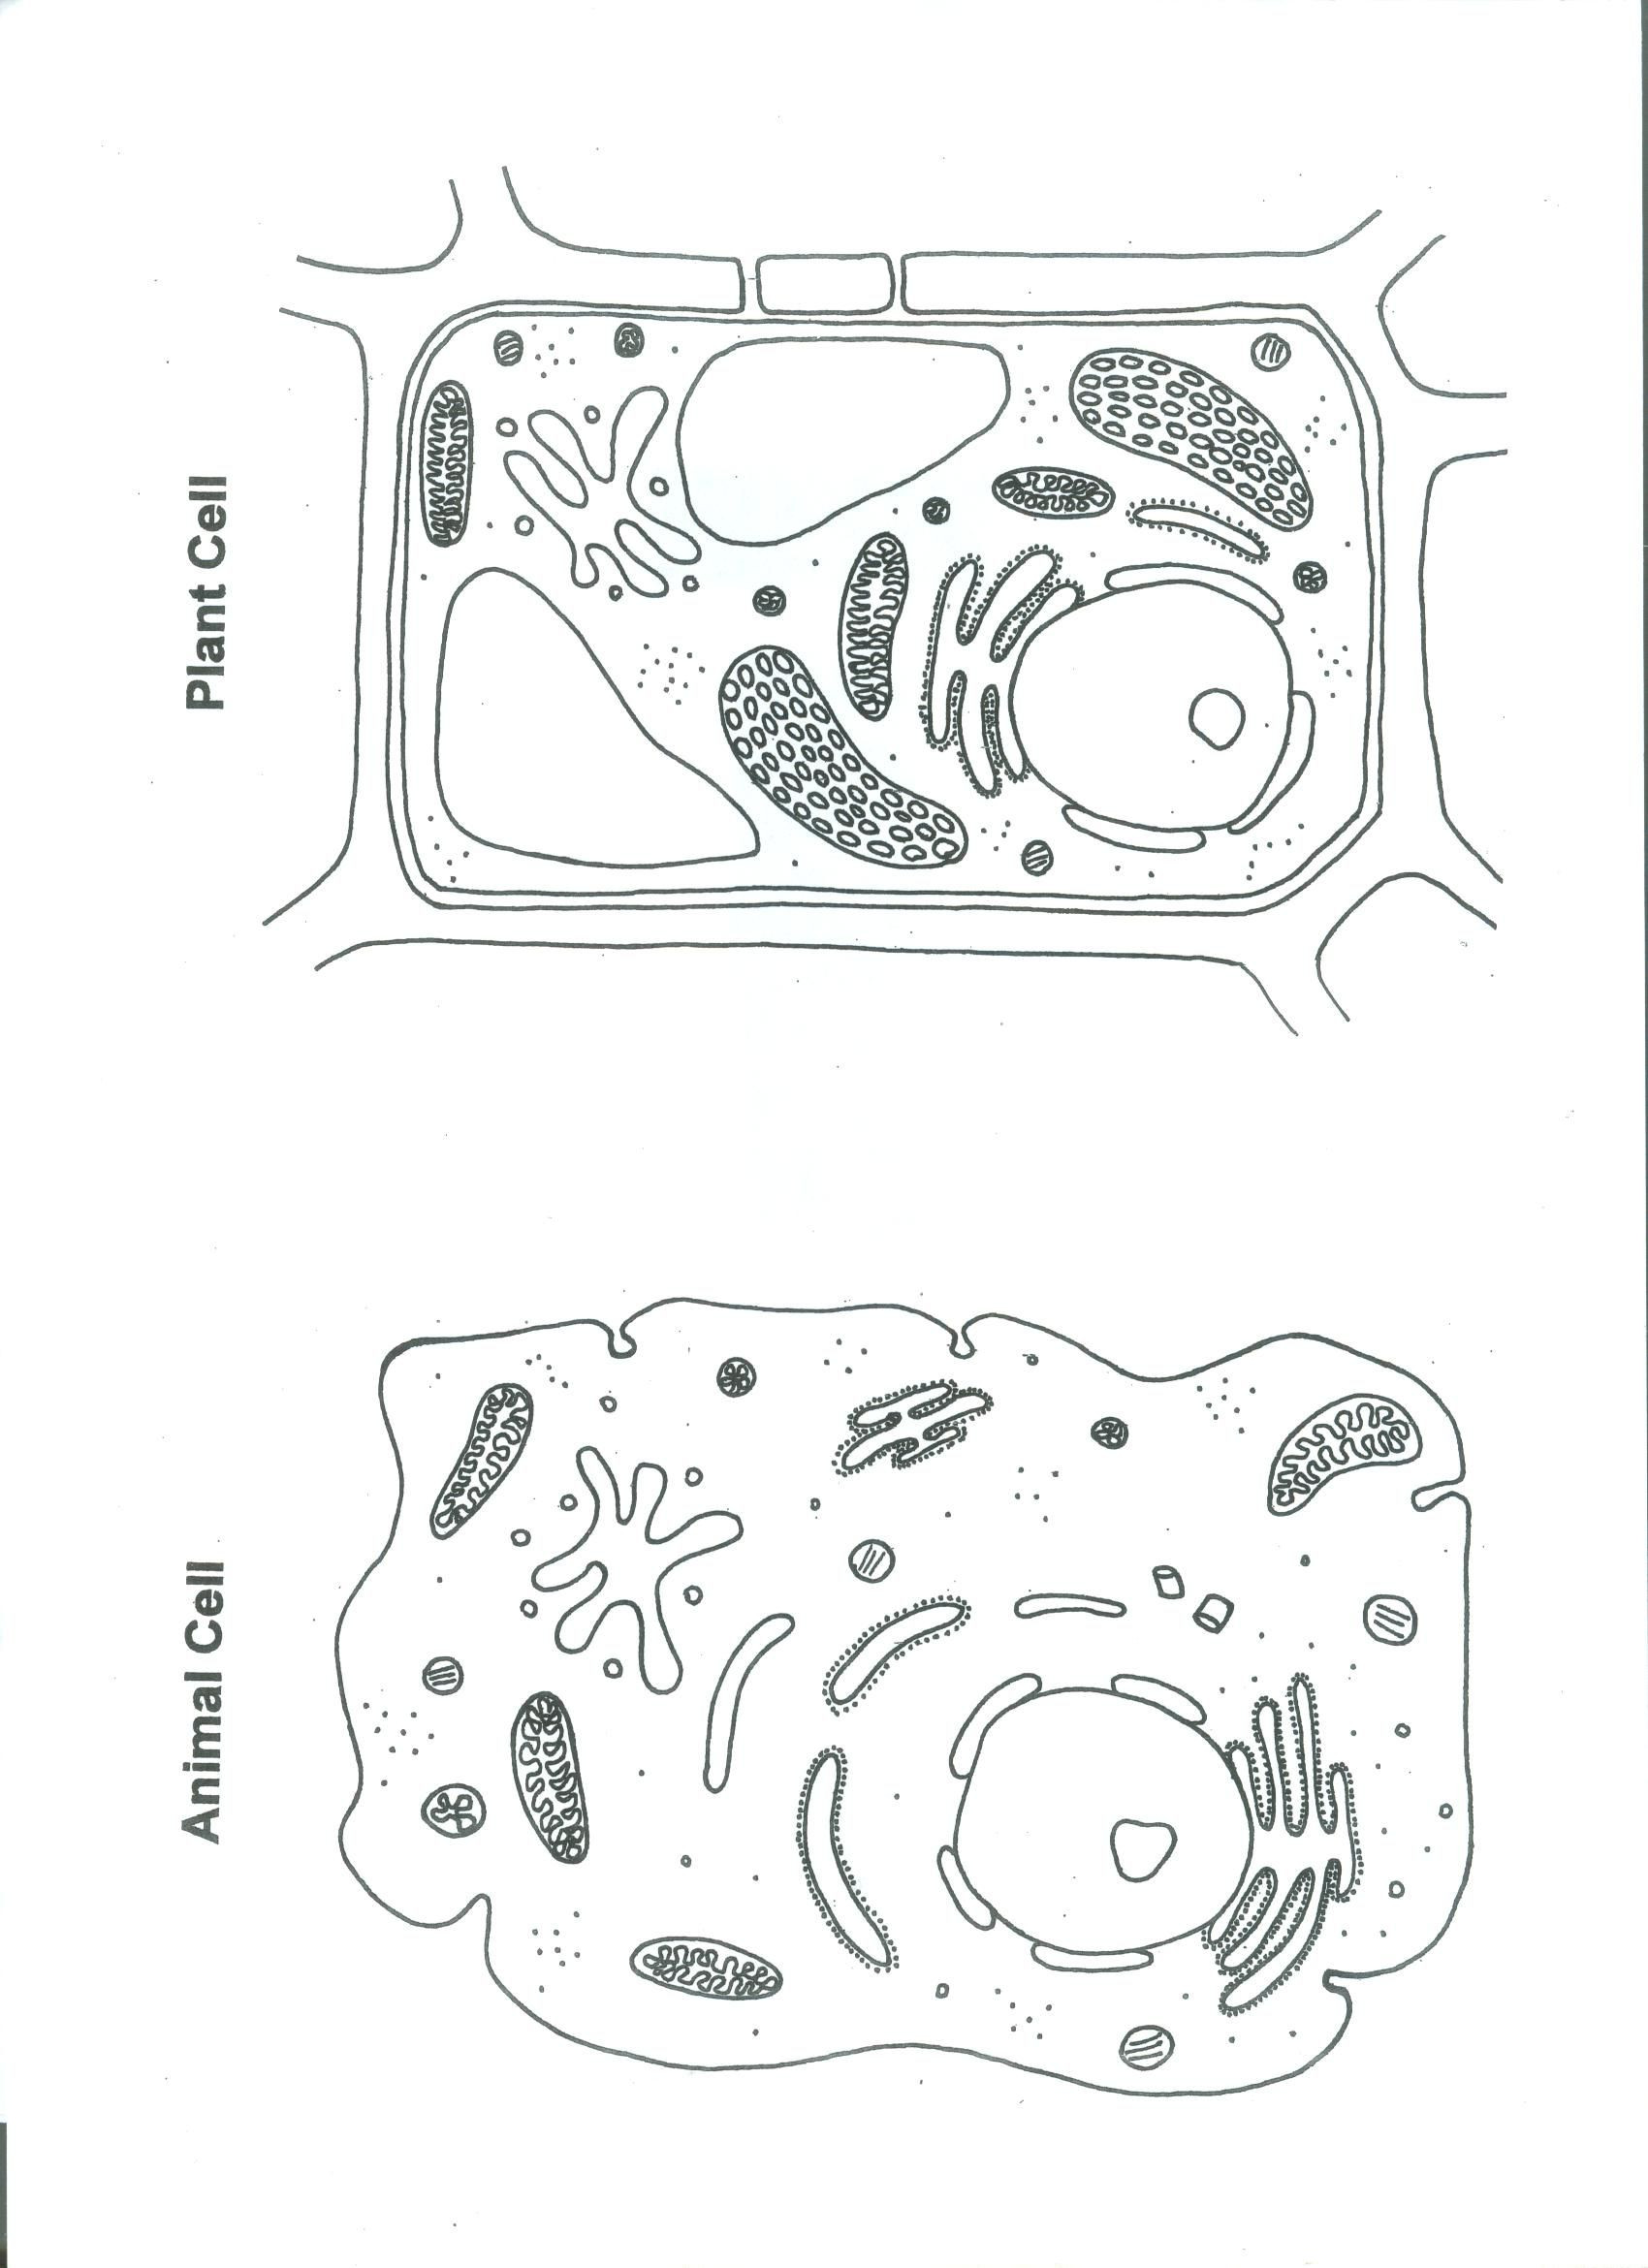 Printable Animal Cell Diagram Shrinky Plant and Animal Cell 001 1 7002 340 Pixels